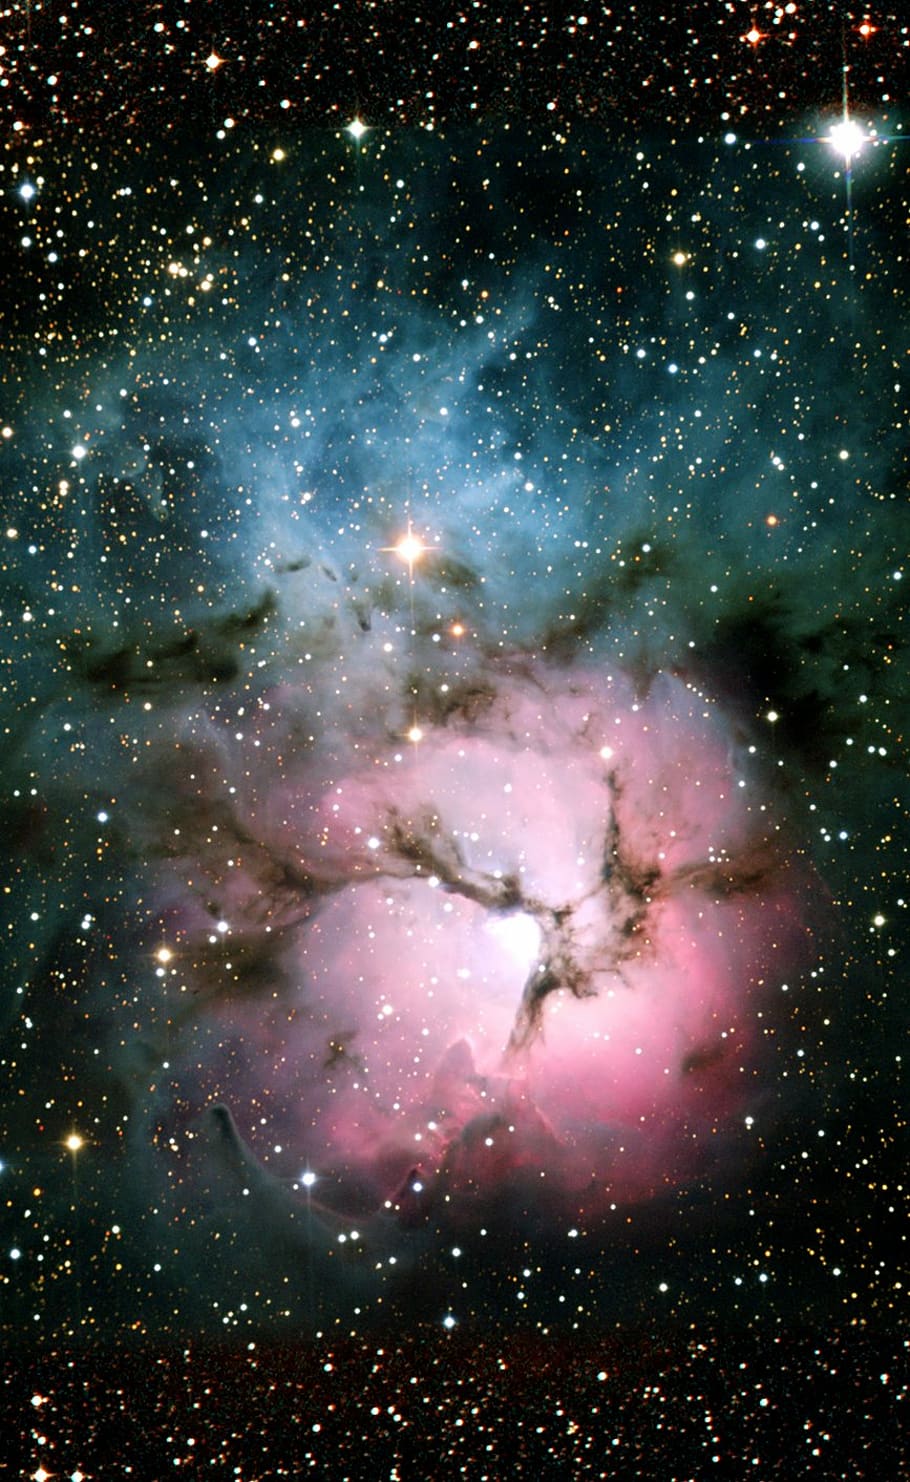 trifid nebula, messier 20, ngc 6514, emission nebula, reflection nebulae, constellation sagittarius, galaxy, starry sky, space, universe